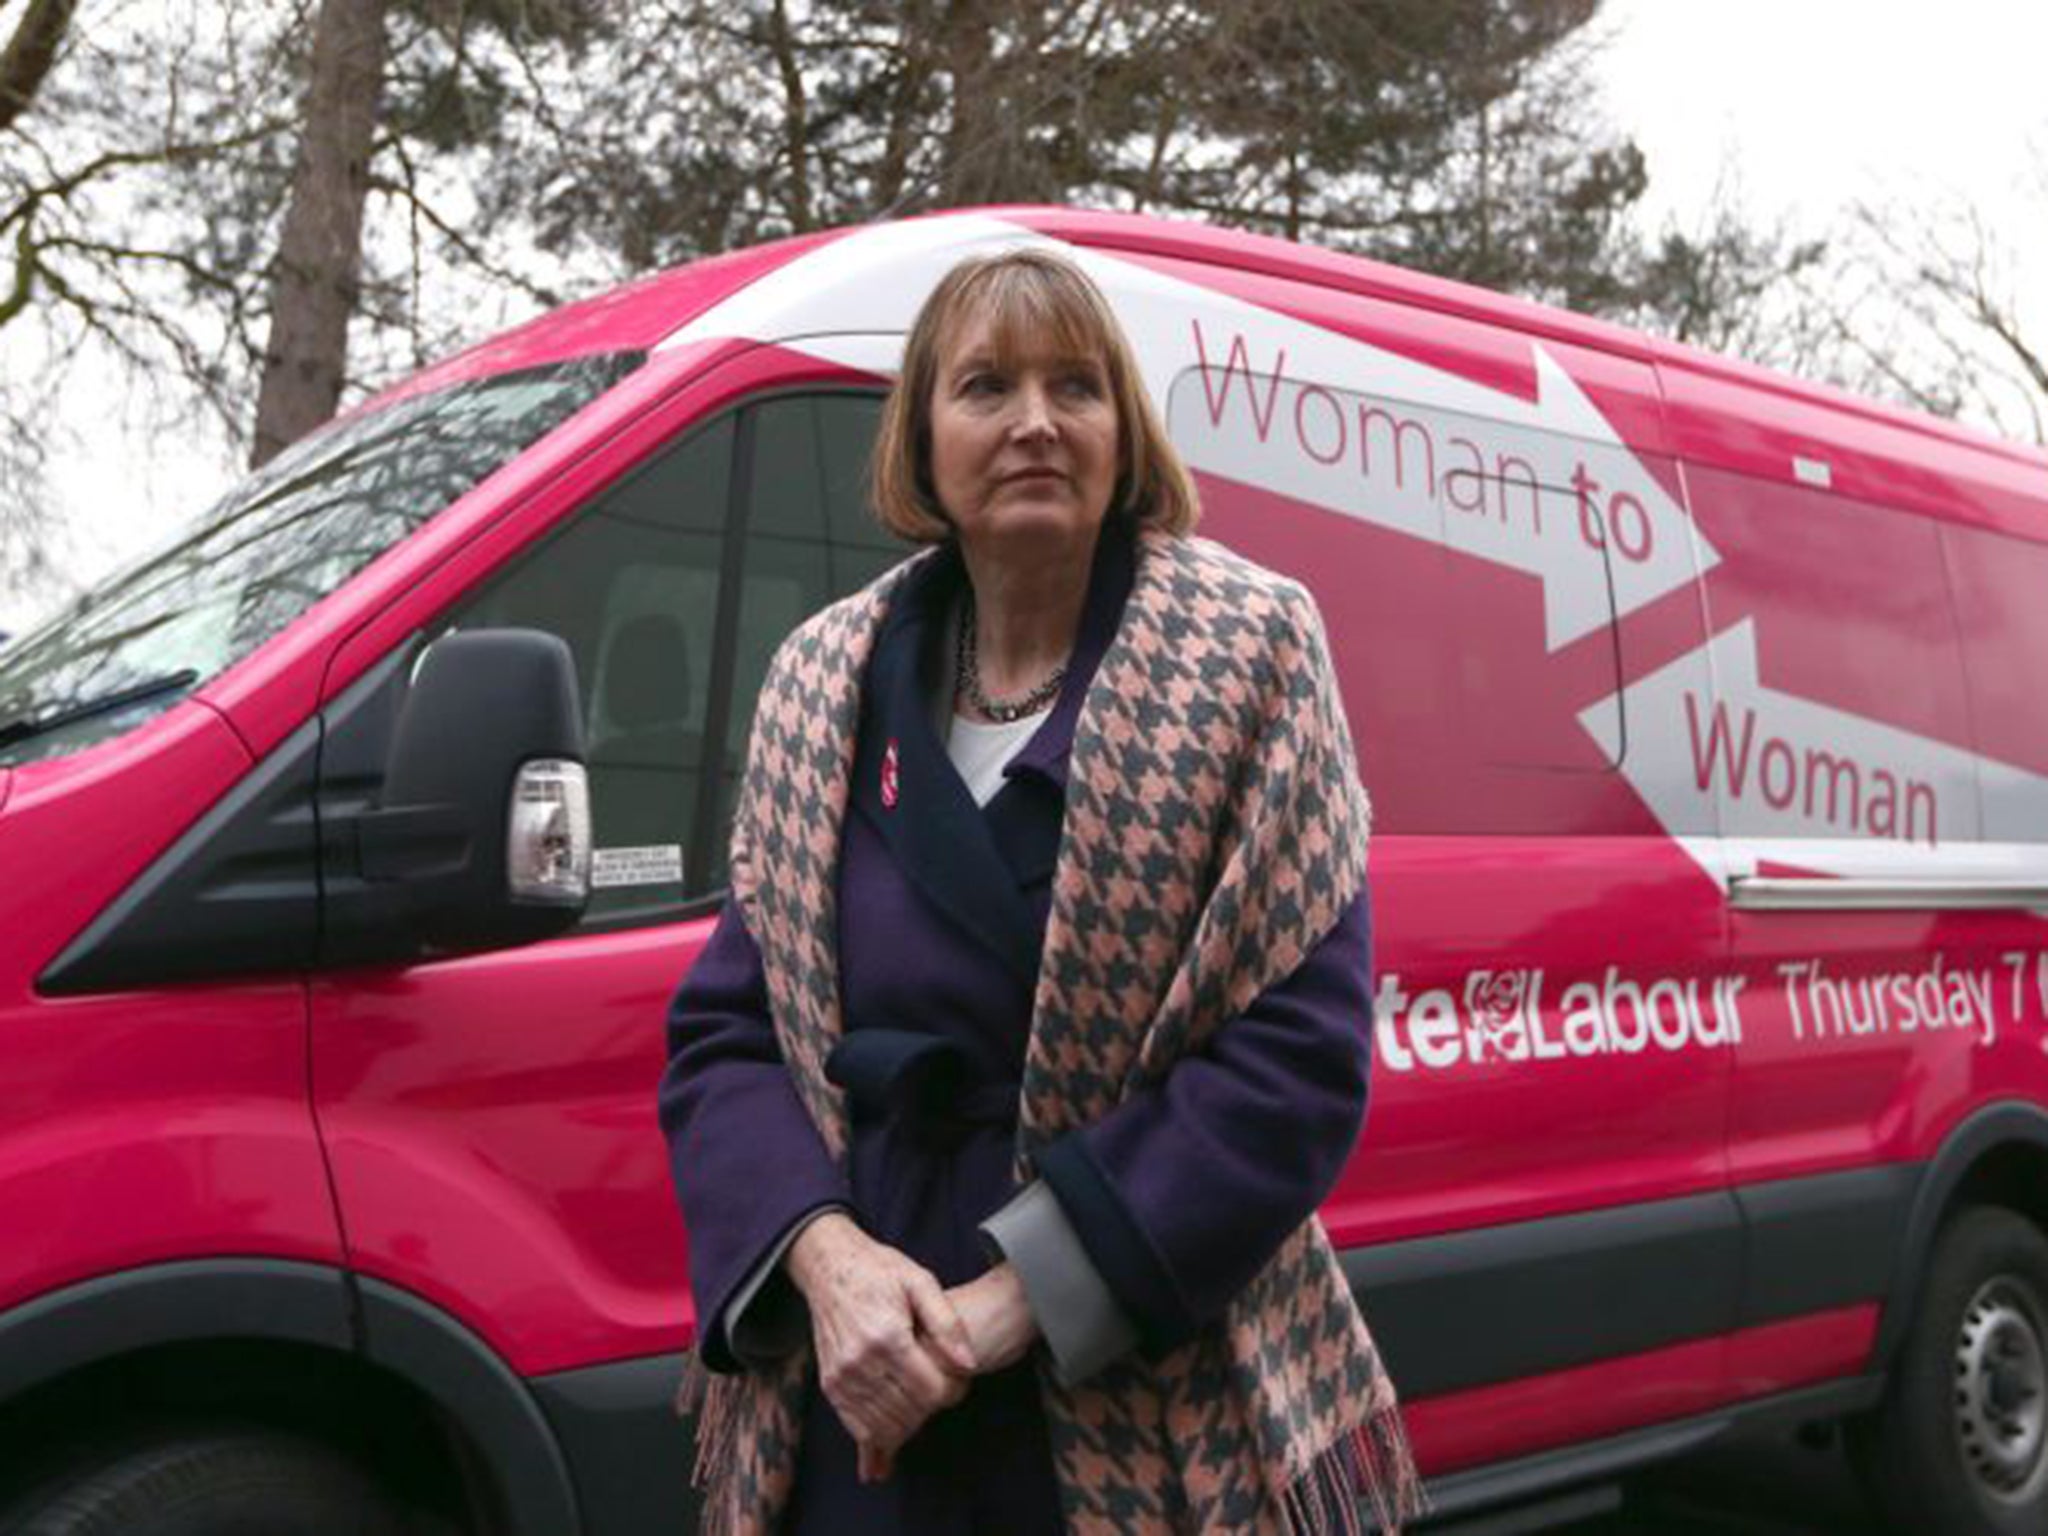 Harriet Harman has described Labour’s bus as “magenta”